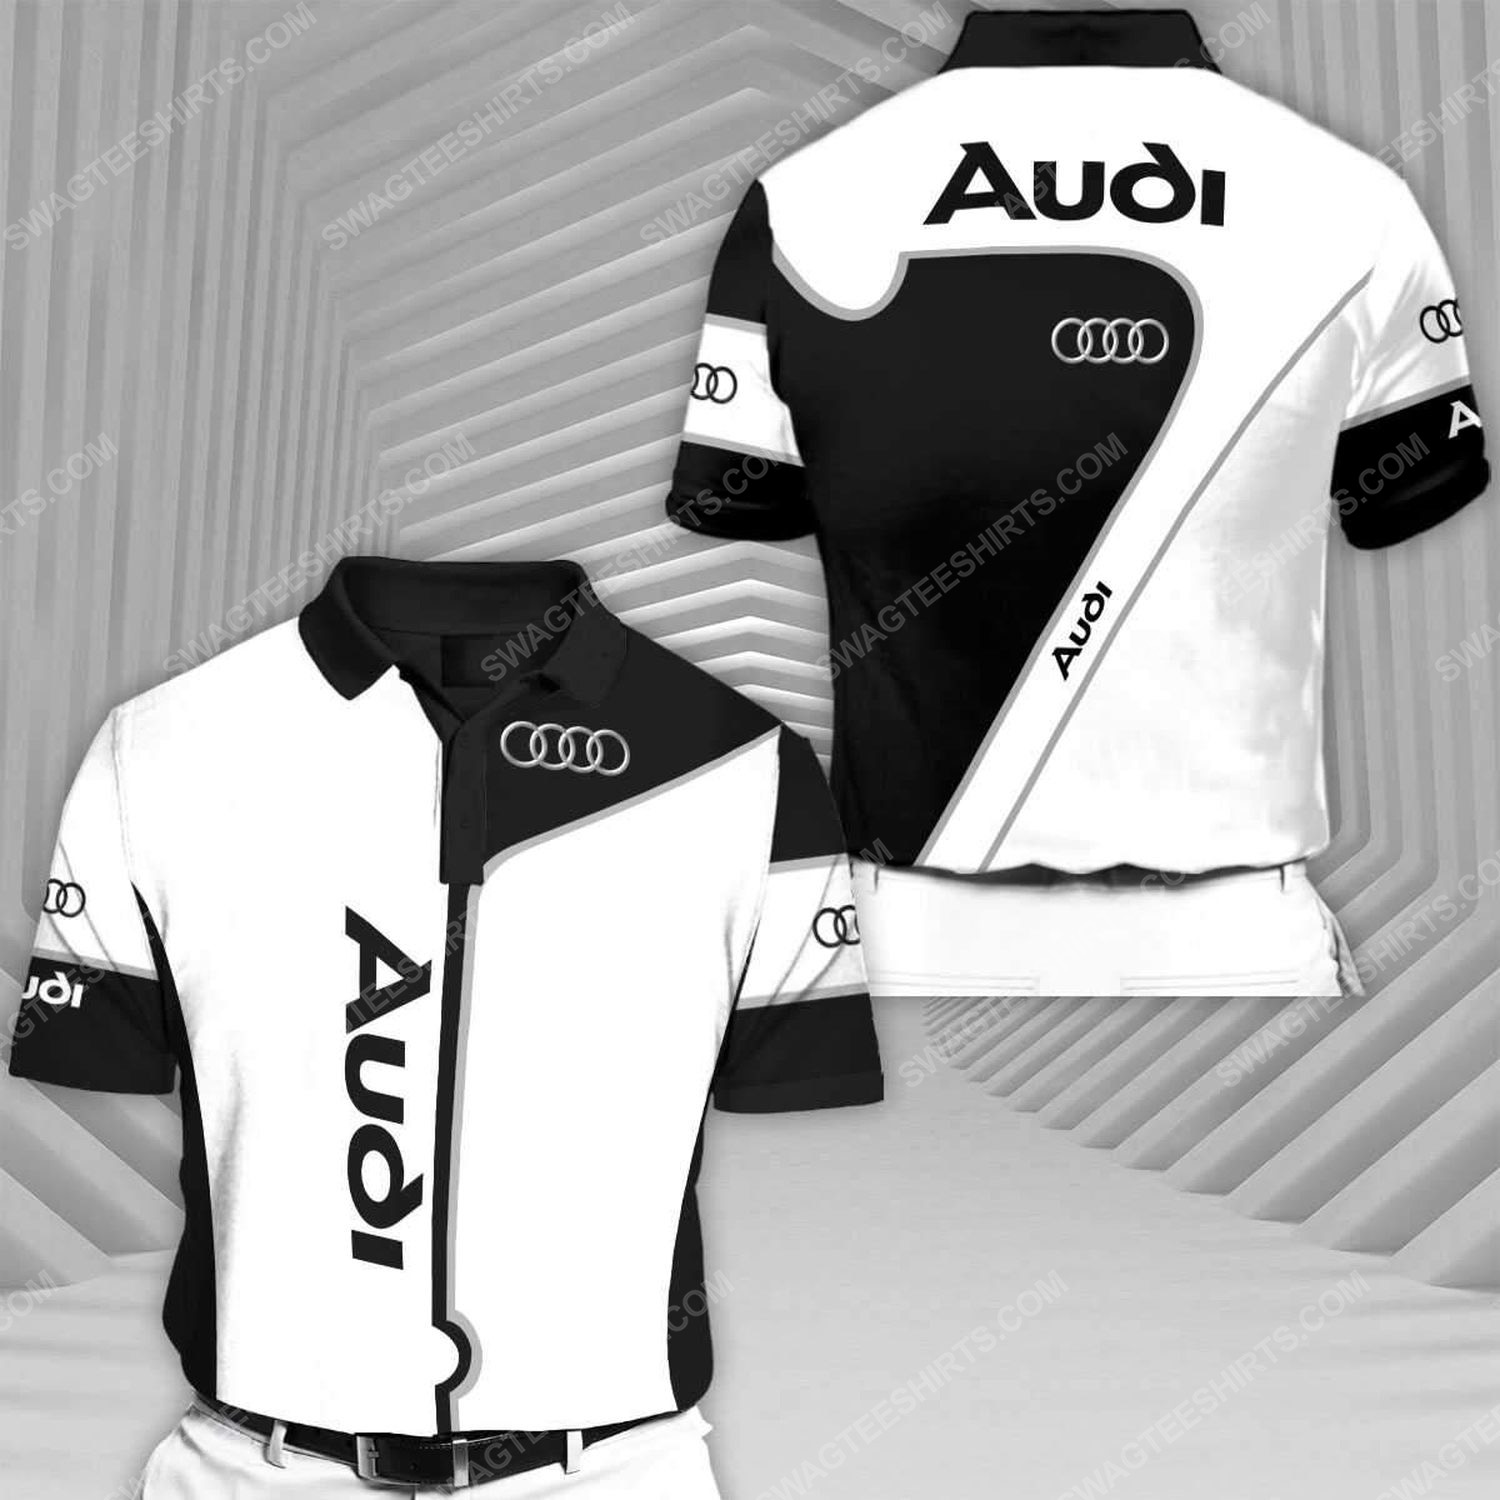 Audi sports car racing all over print polo shirt 1 - Copy (2)